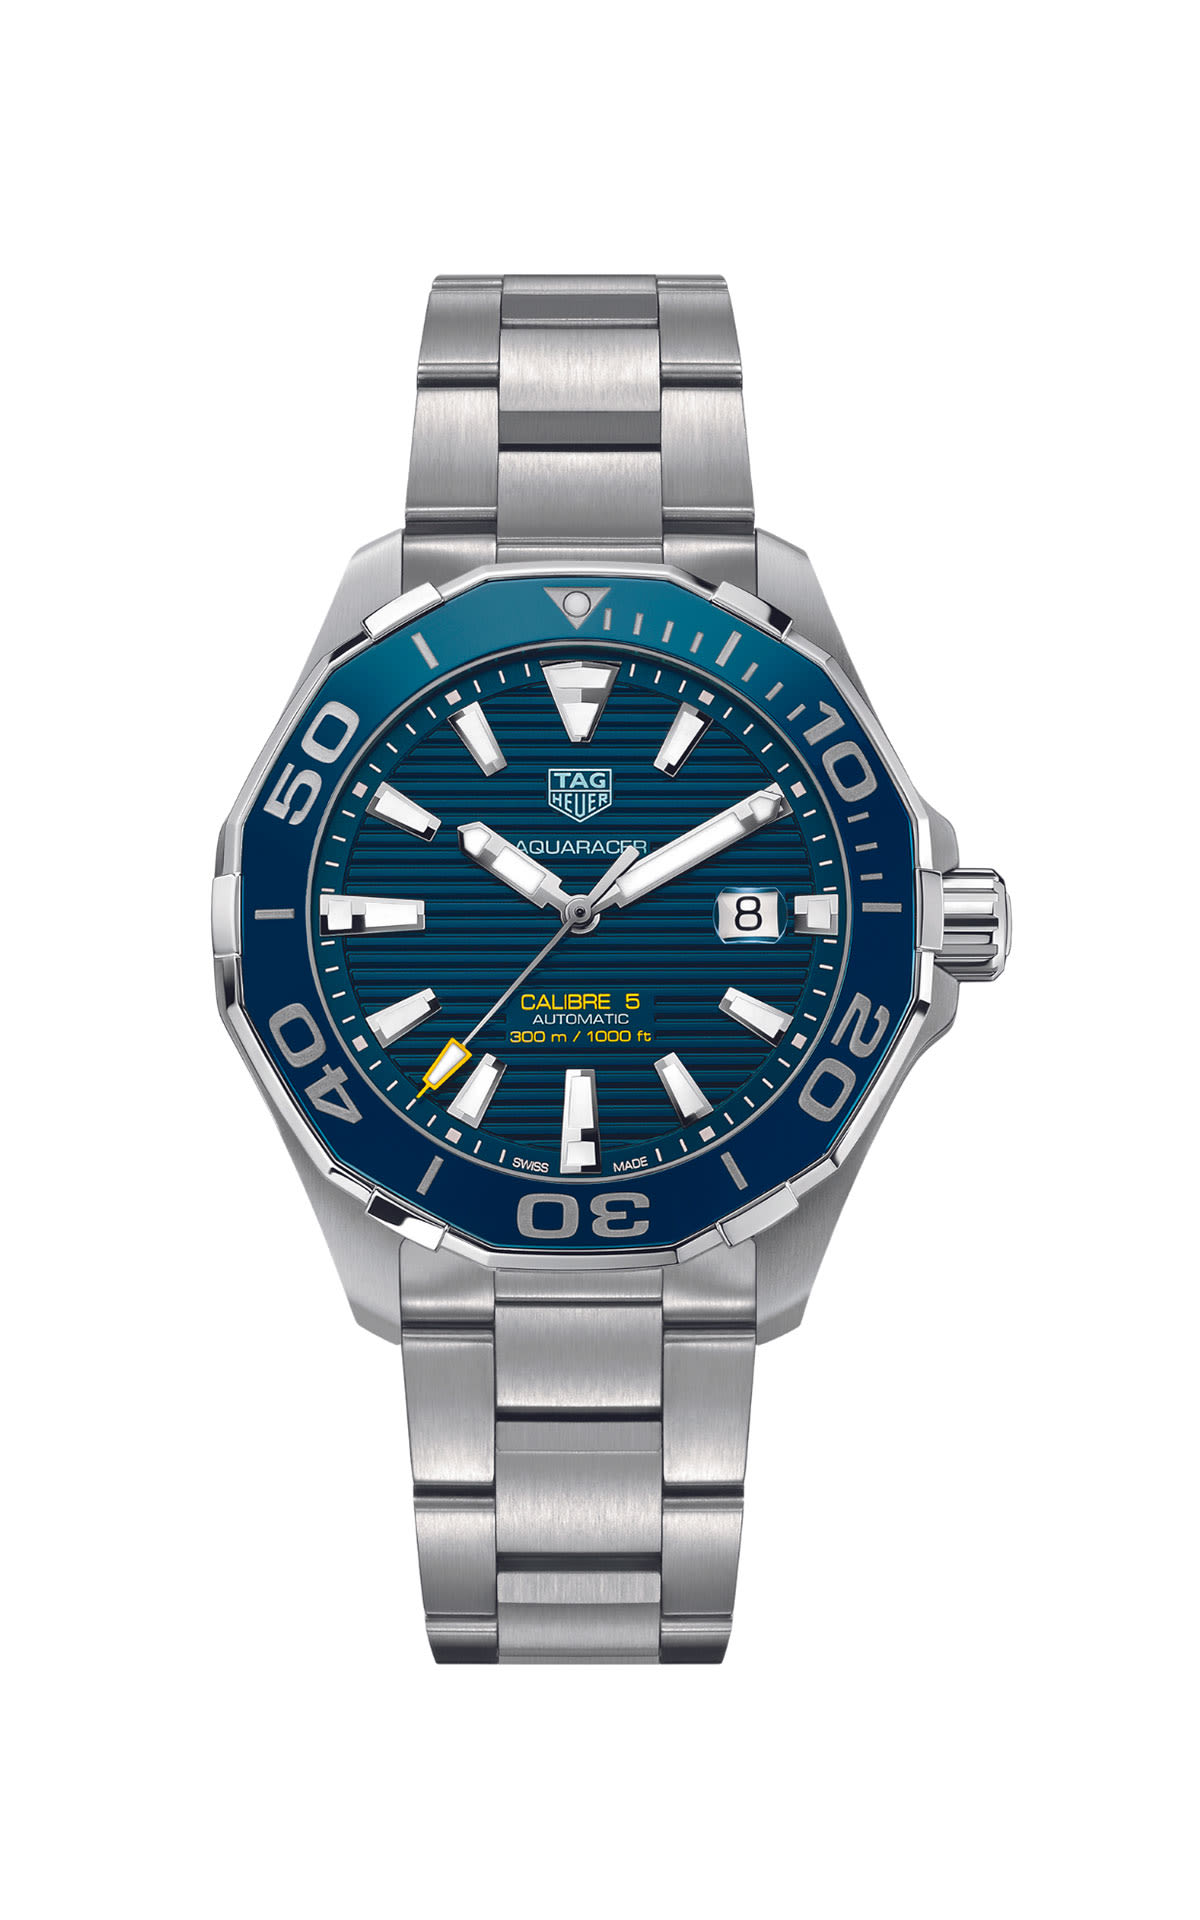 Aquaracer Calibre 5 watch